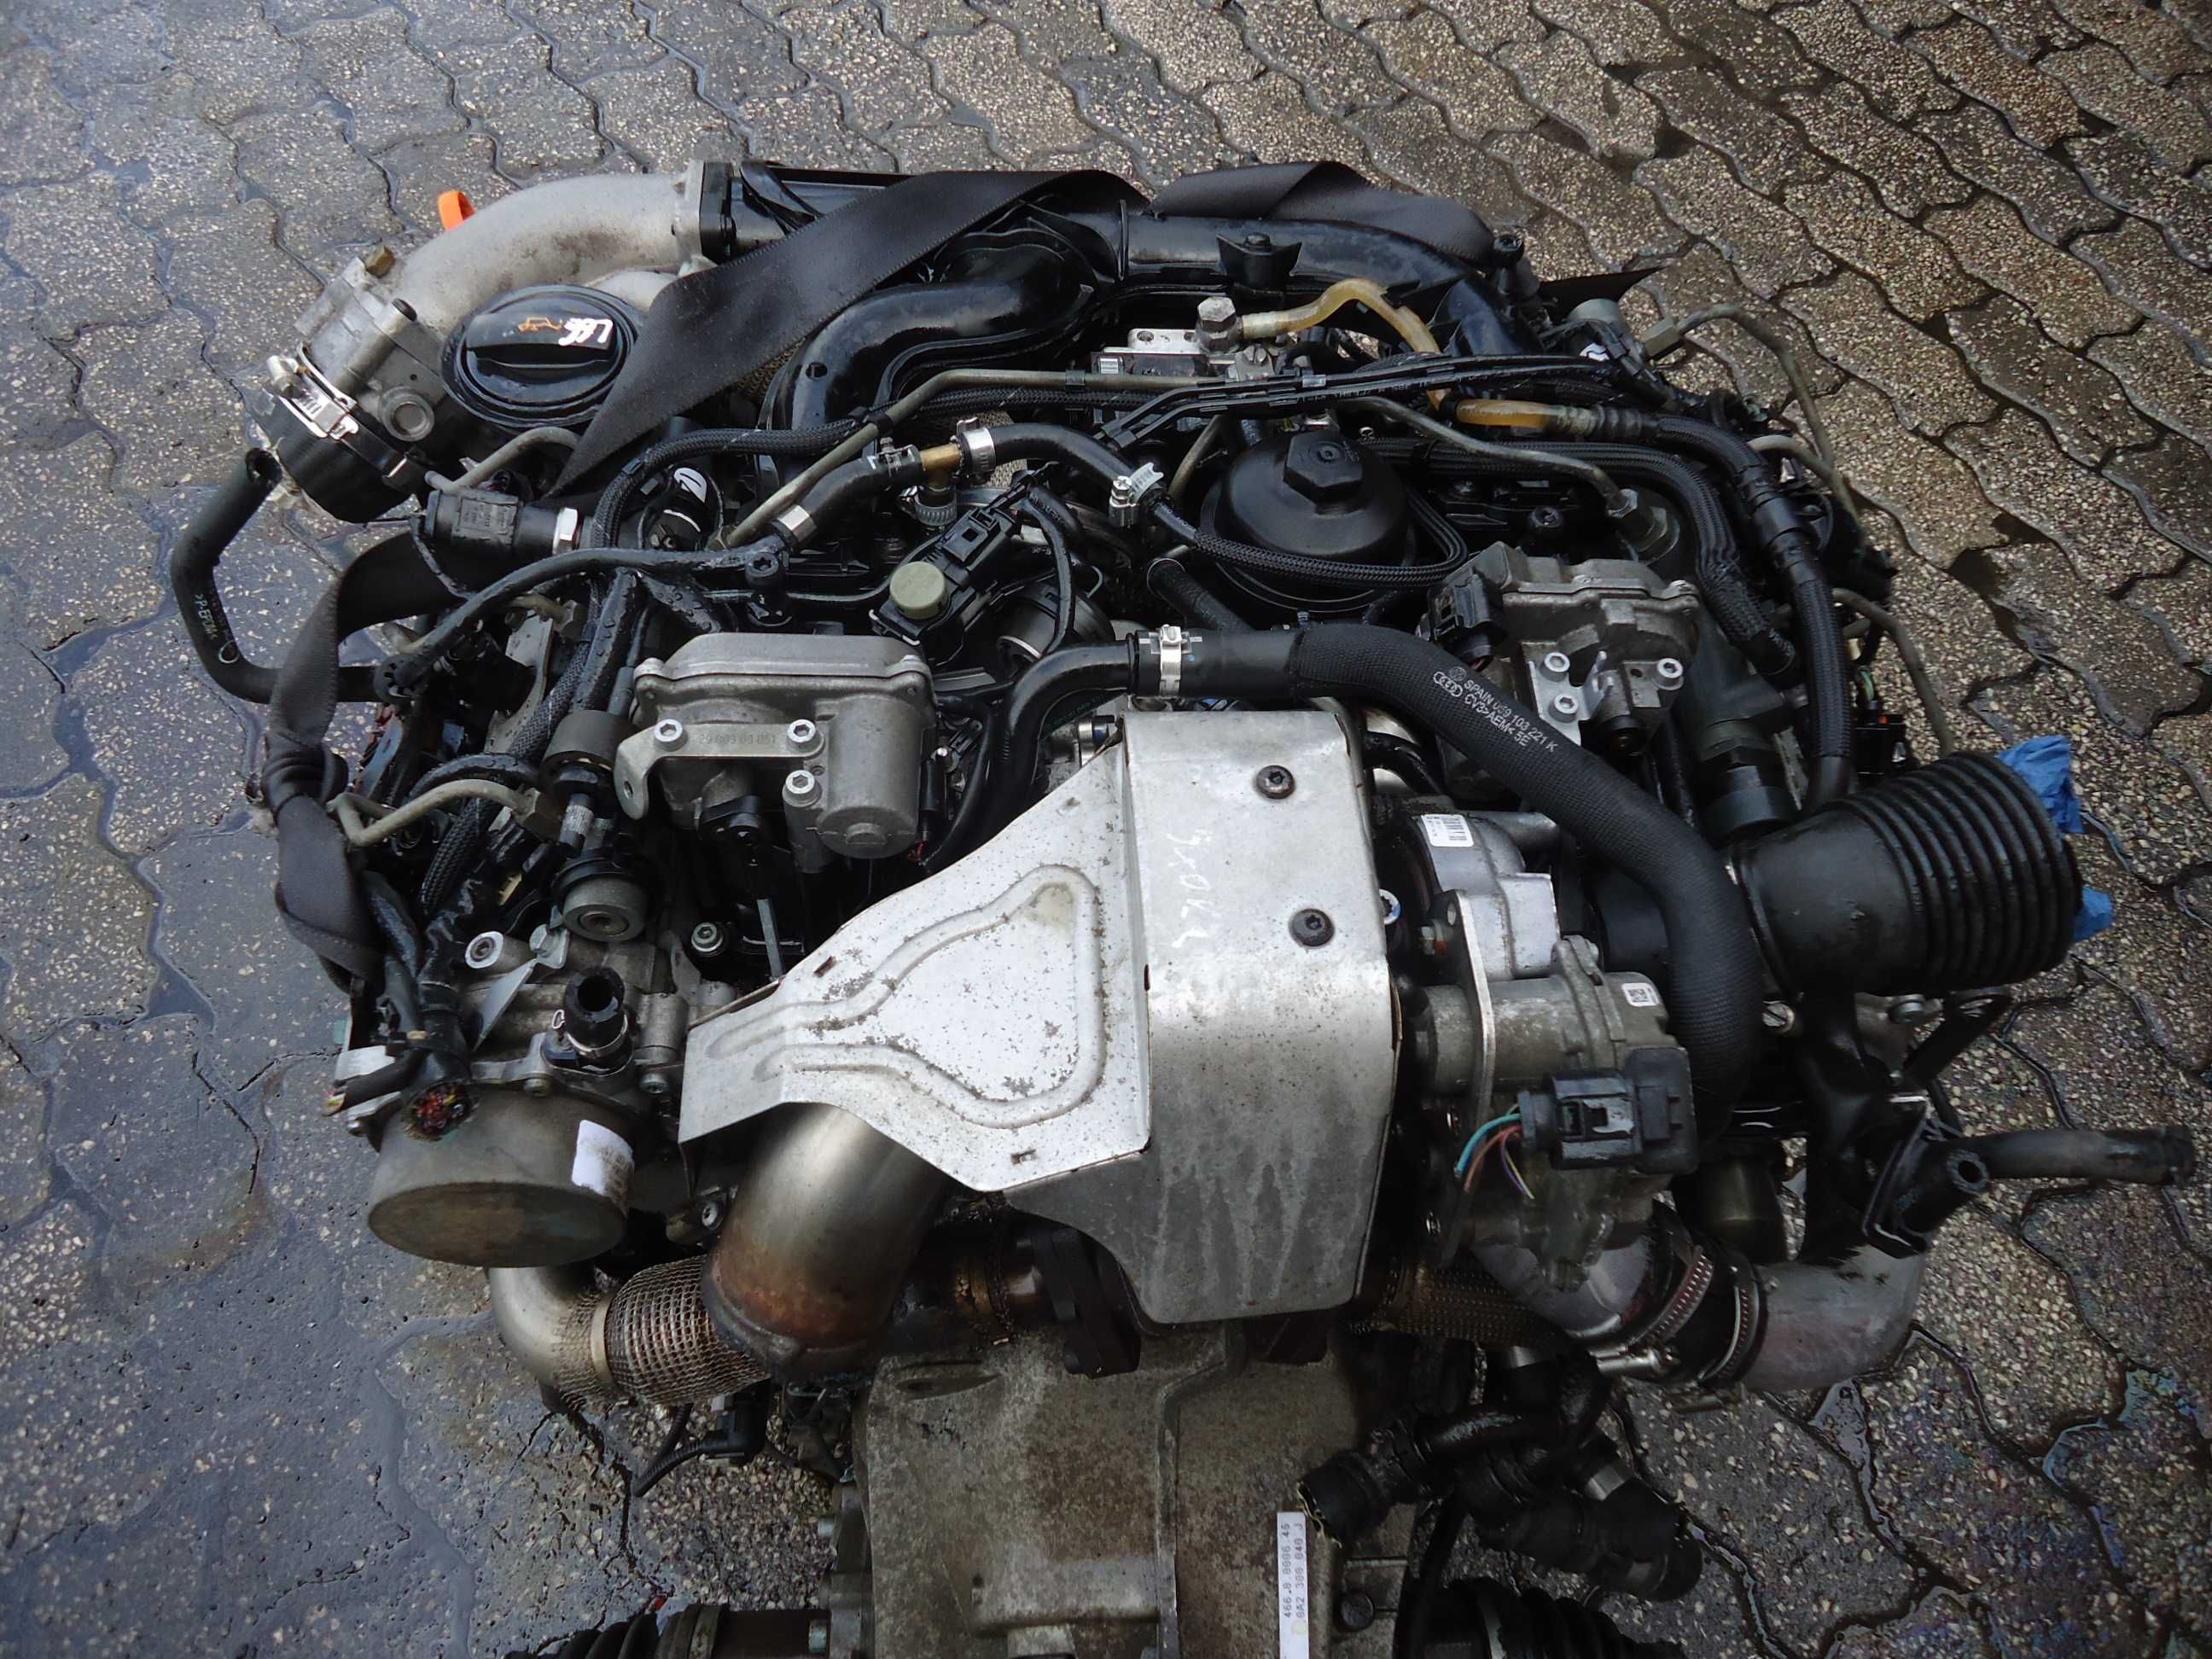 Motor Audi A6 2.7 Tdi (BPP)